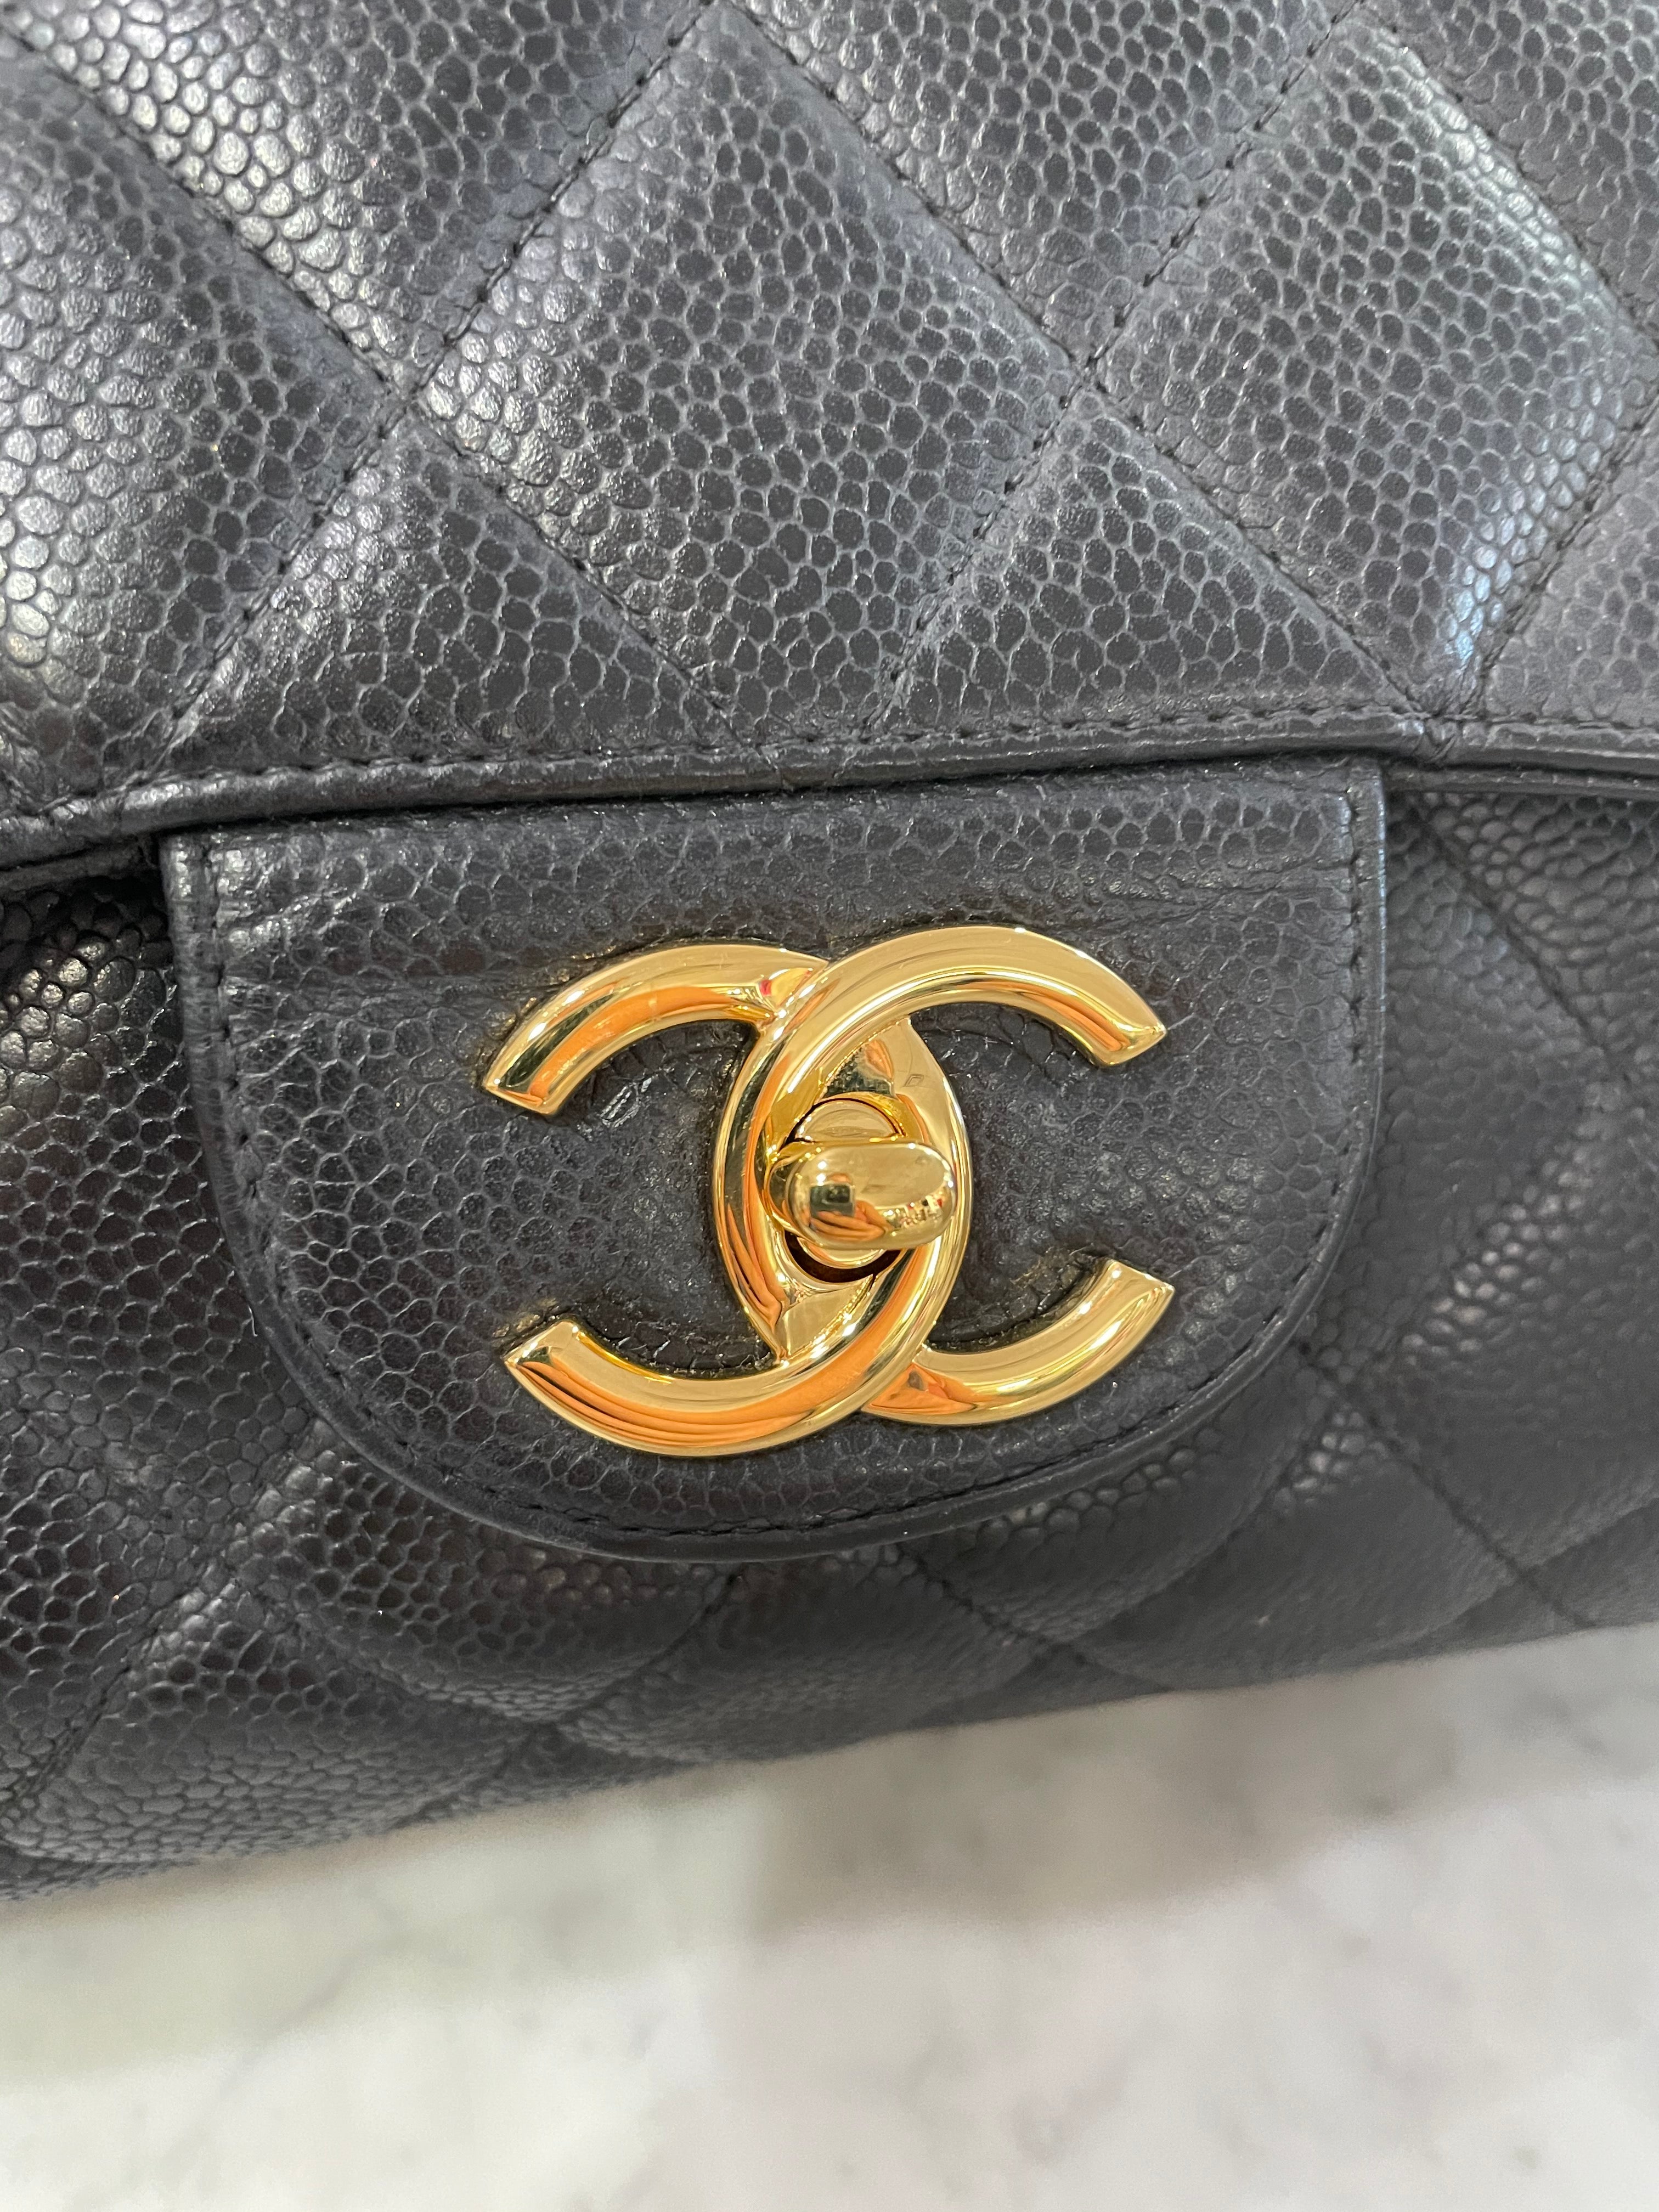 CHANEL, Bags, Brand New 223 Chanel Classic Jumbo Handbag